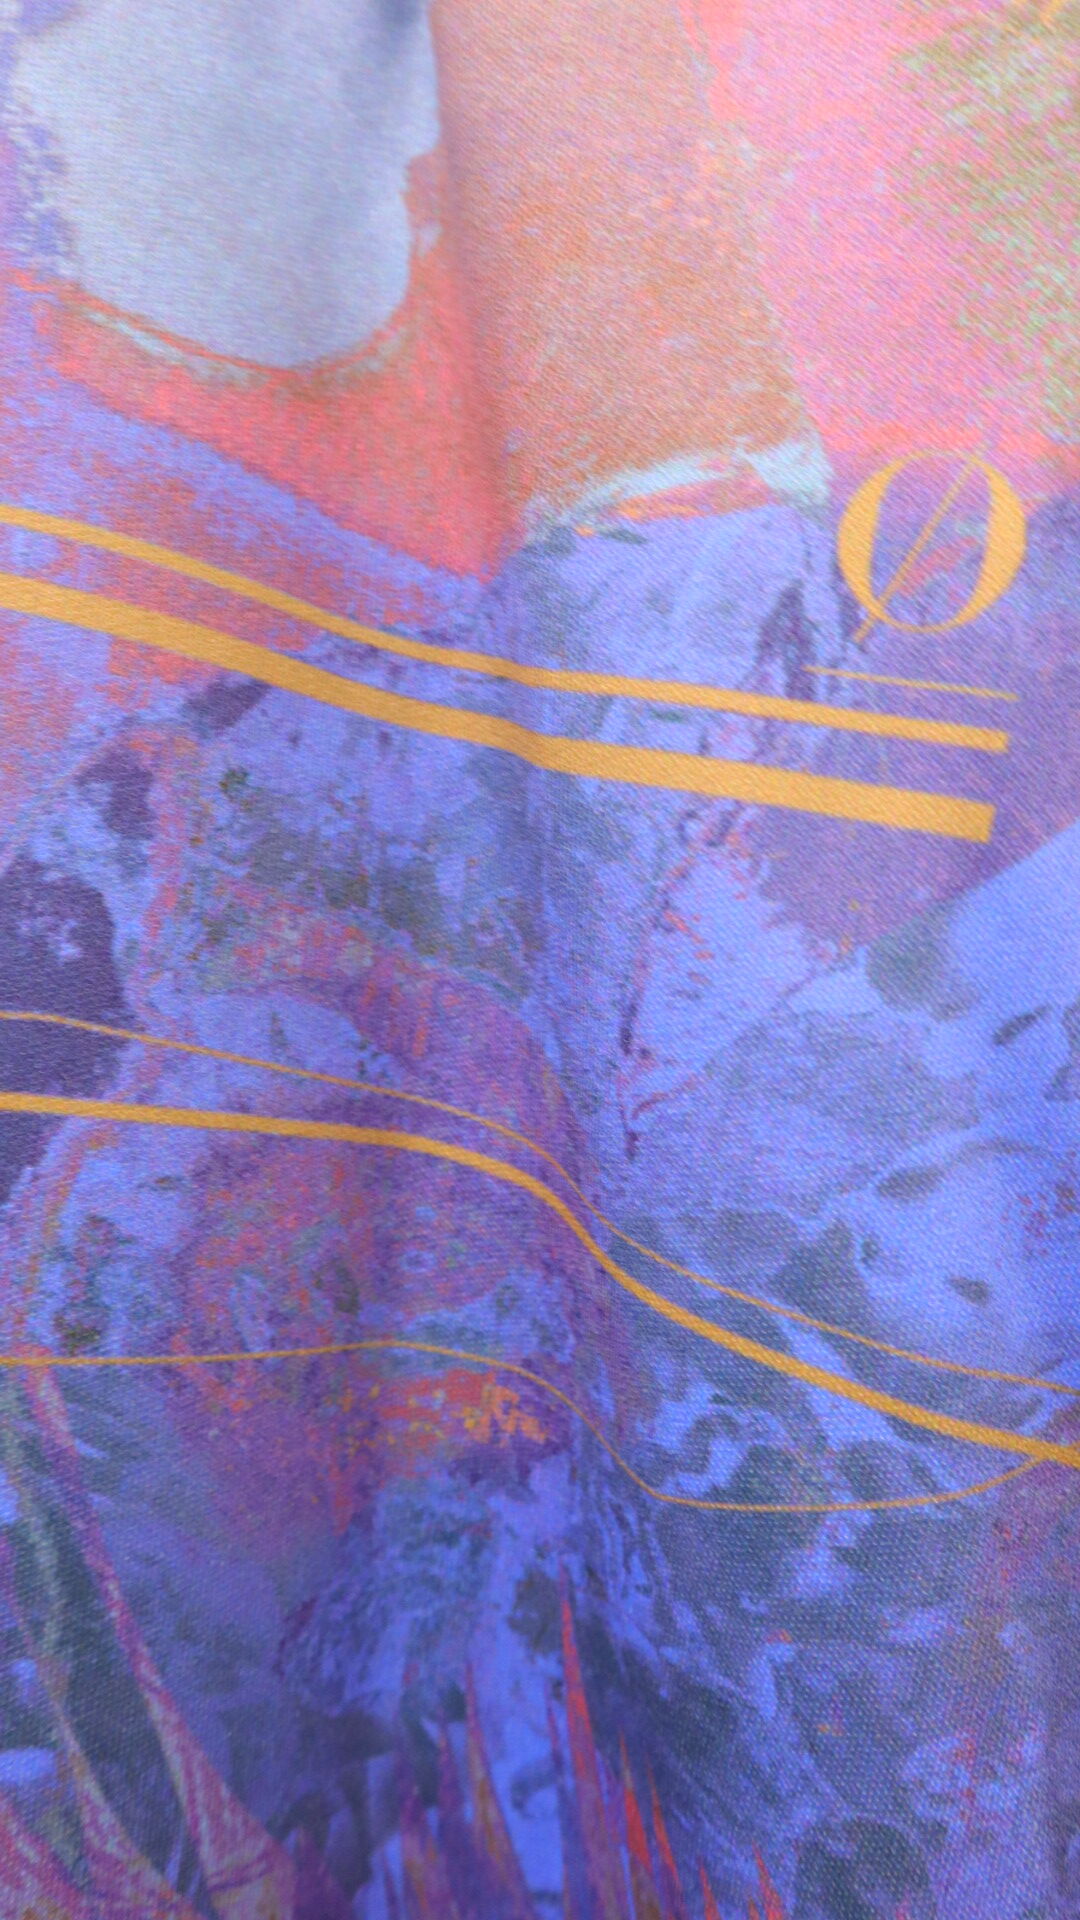 silk screen pants(B)22-09-04 [lilith art duct]